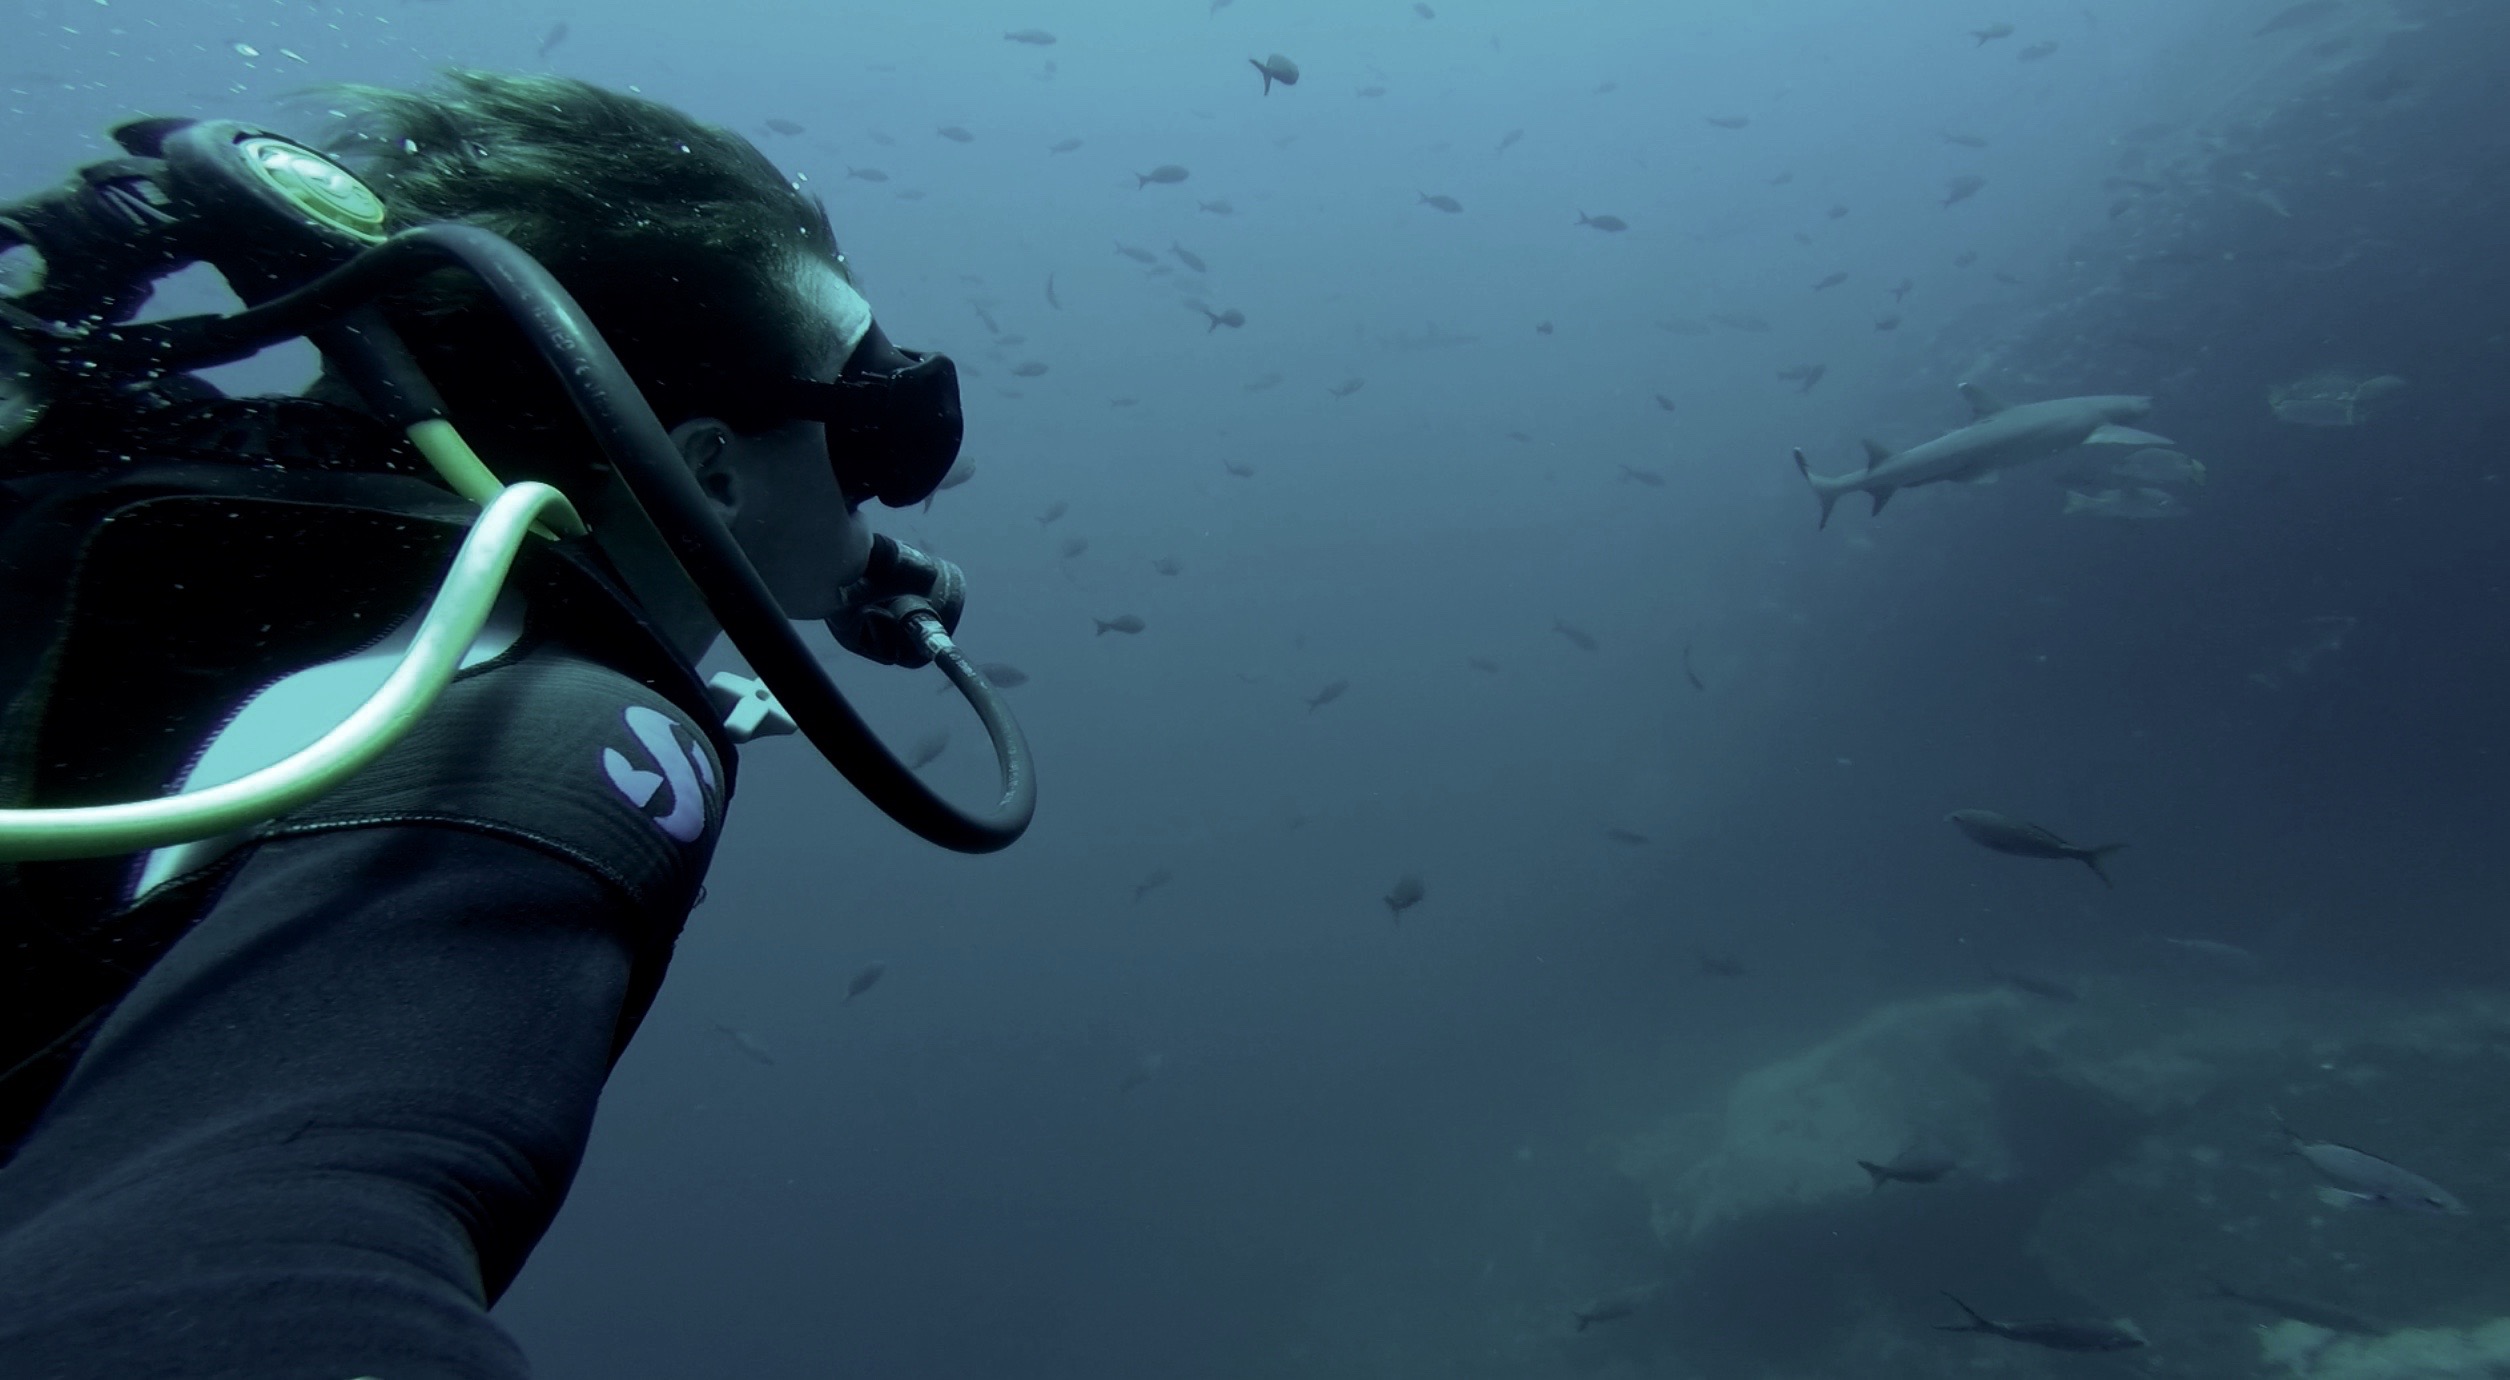 David Simpson swimming with shark in Galapagos, Ecuador. Swimming with sharks in the Galapagos